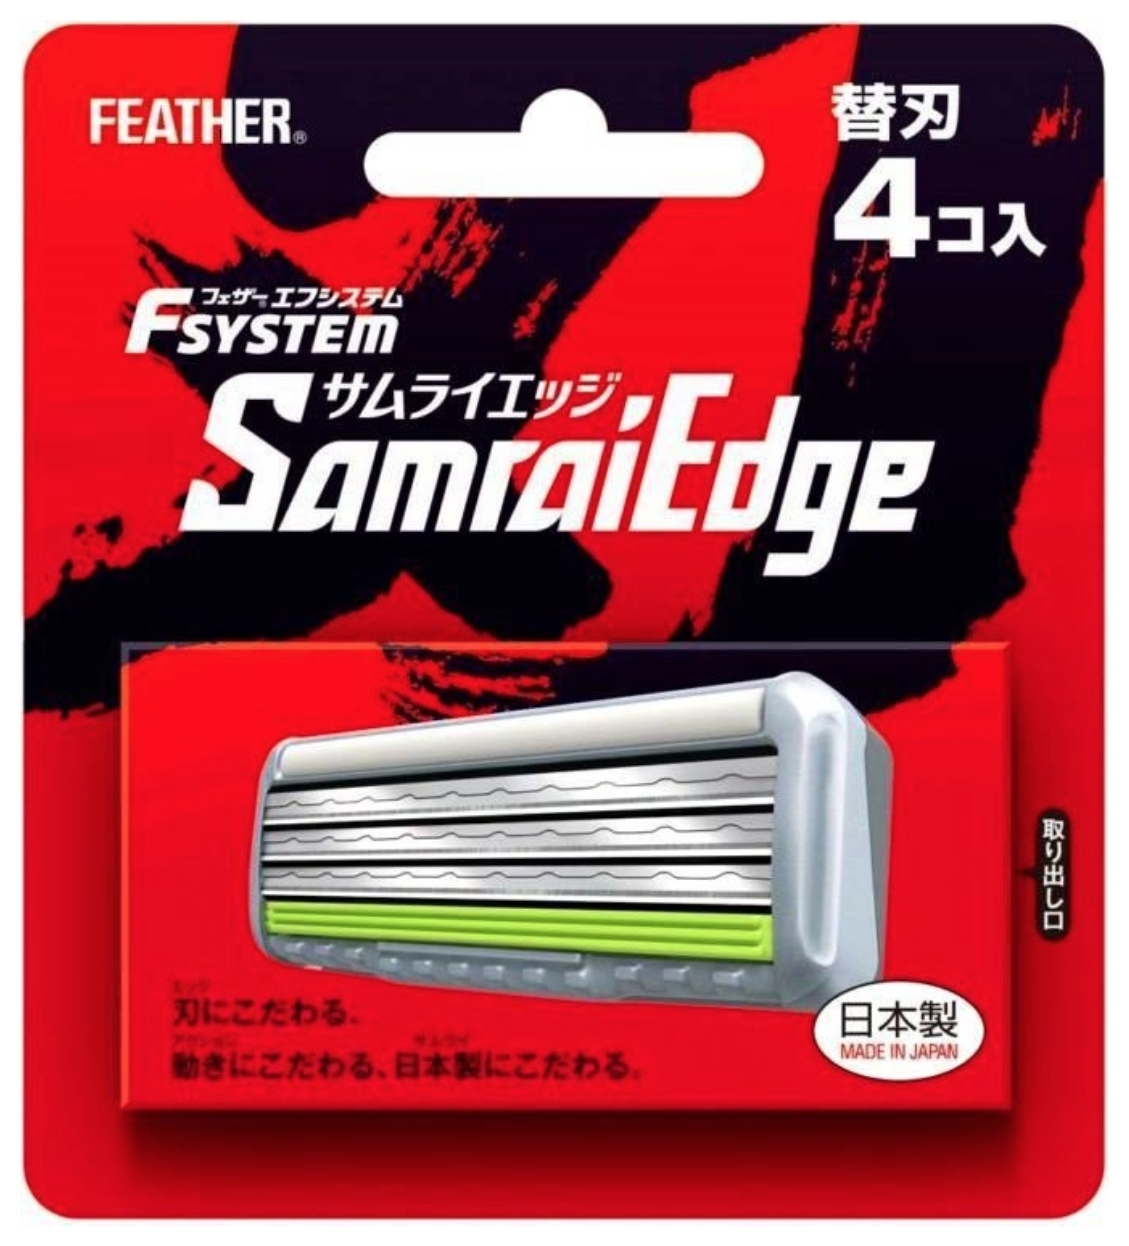 Cменные кассеты для бритвы Samyrai Edge 4шт